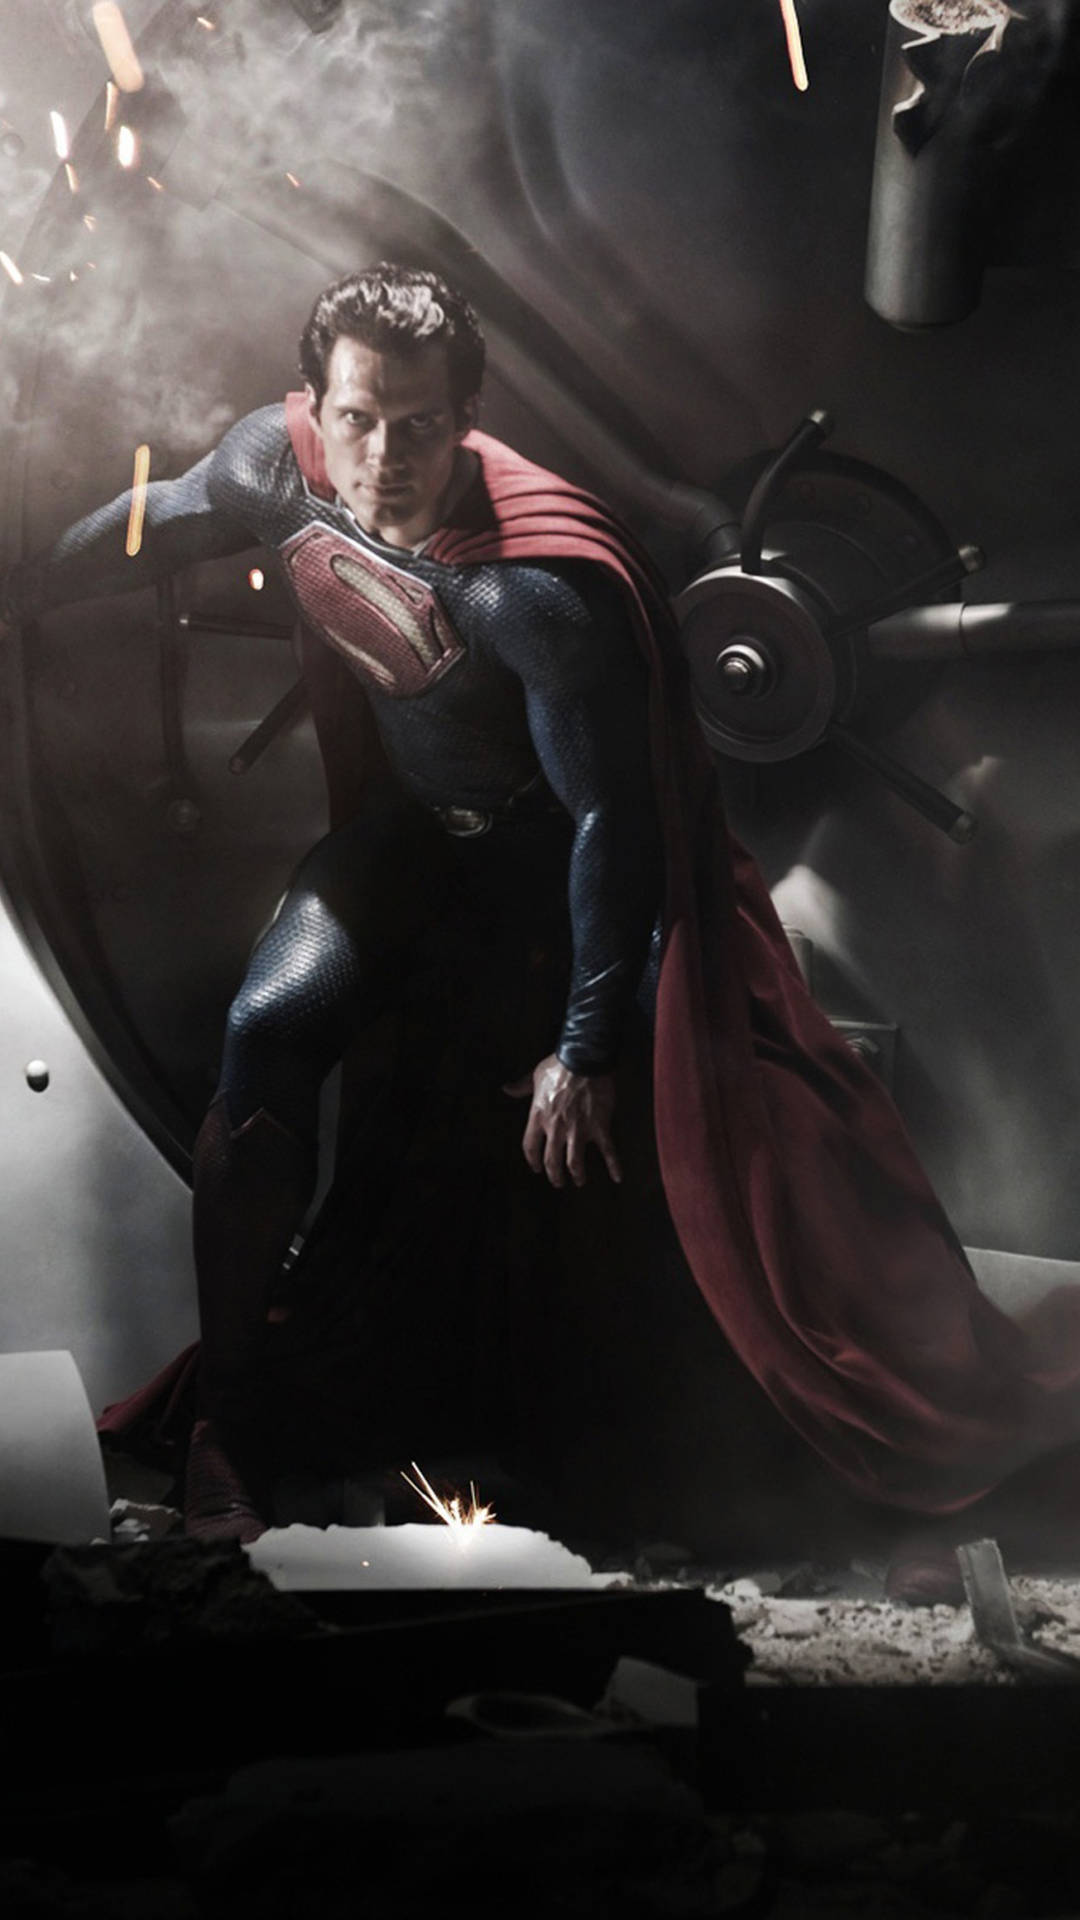 Superman Henry Cavill 2020 4k Wallpaper,HD Superheroes Wallpapers